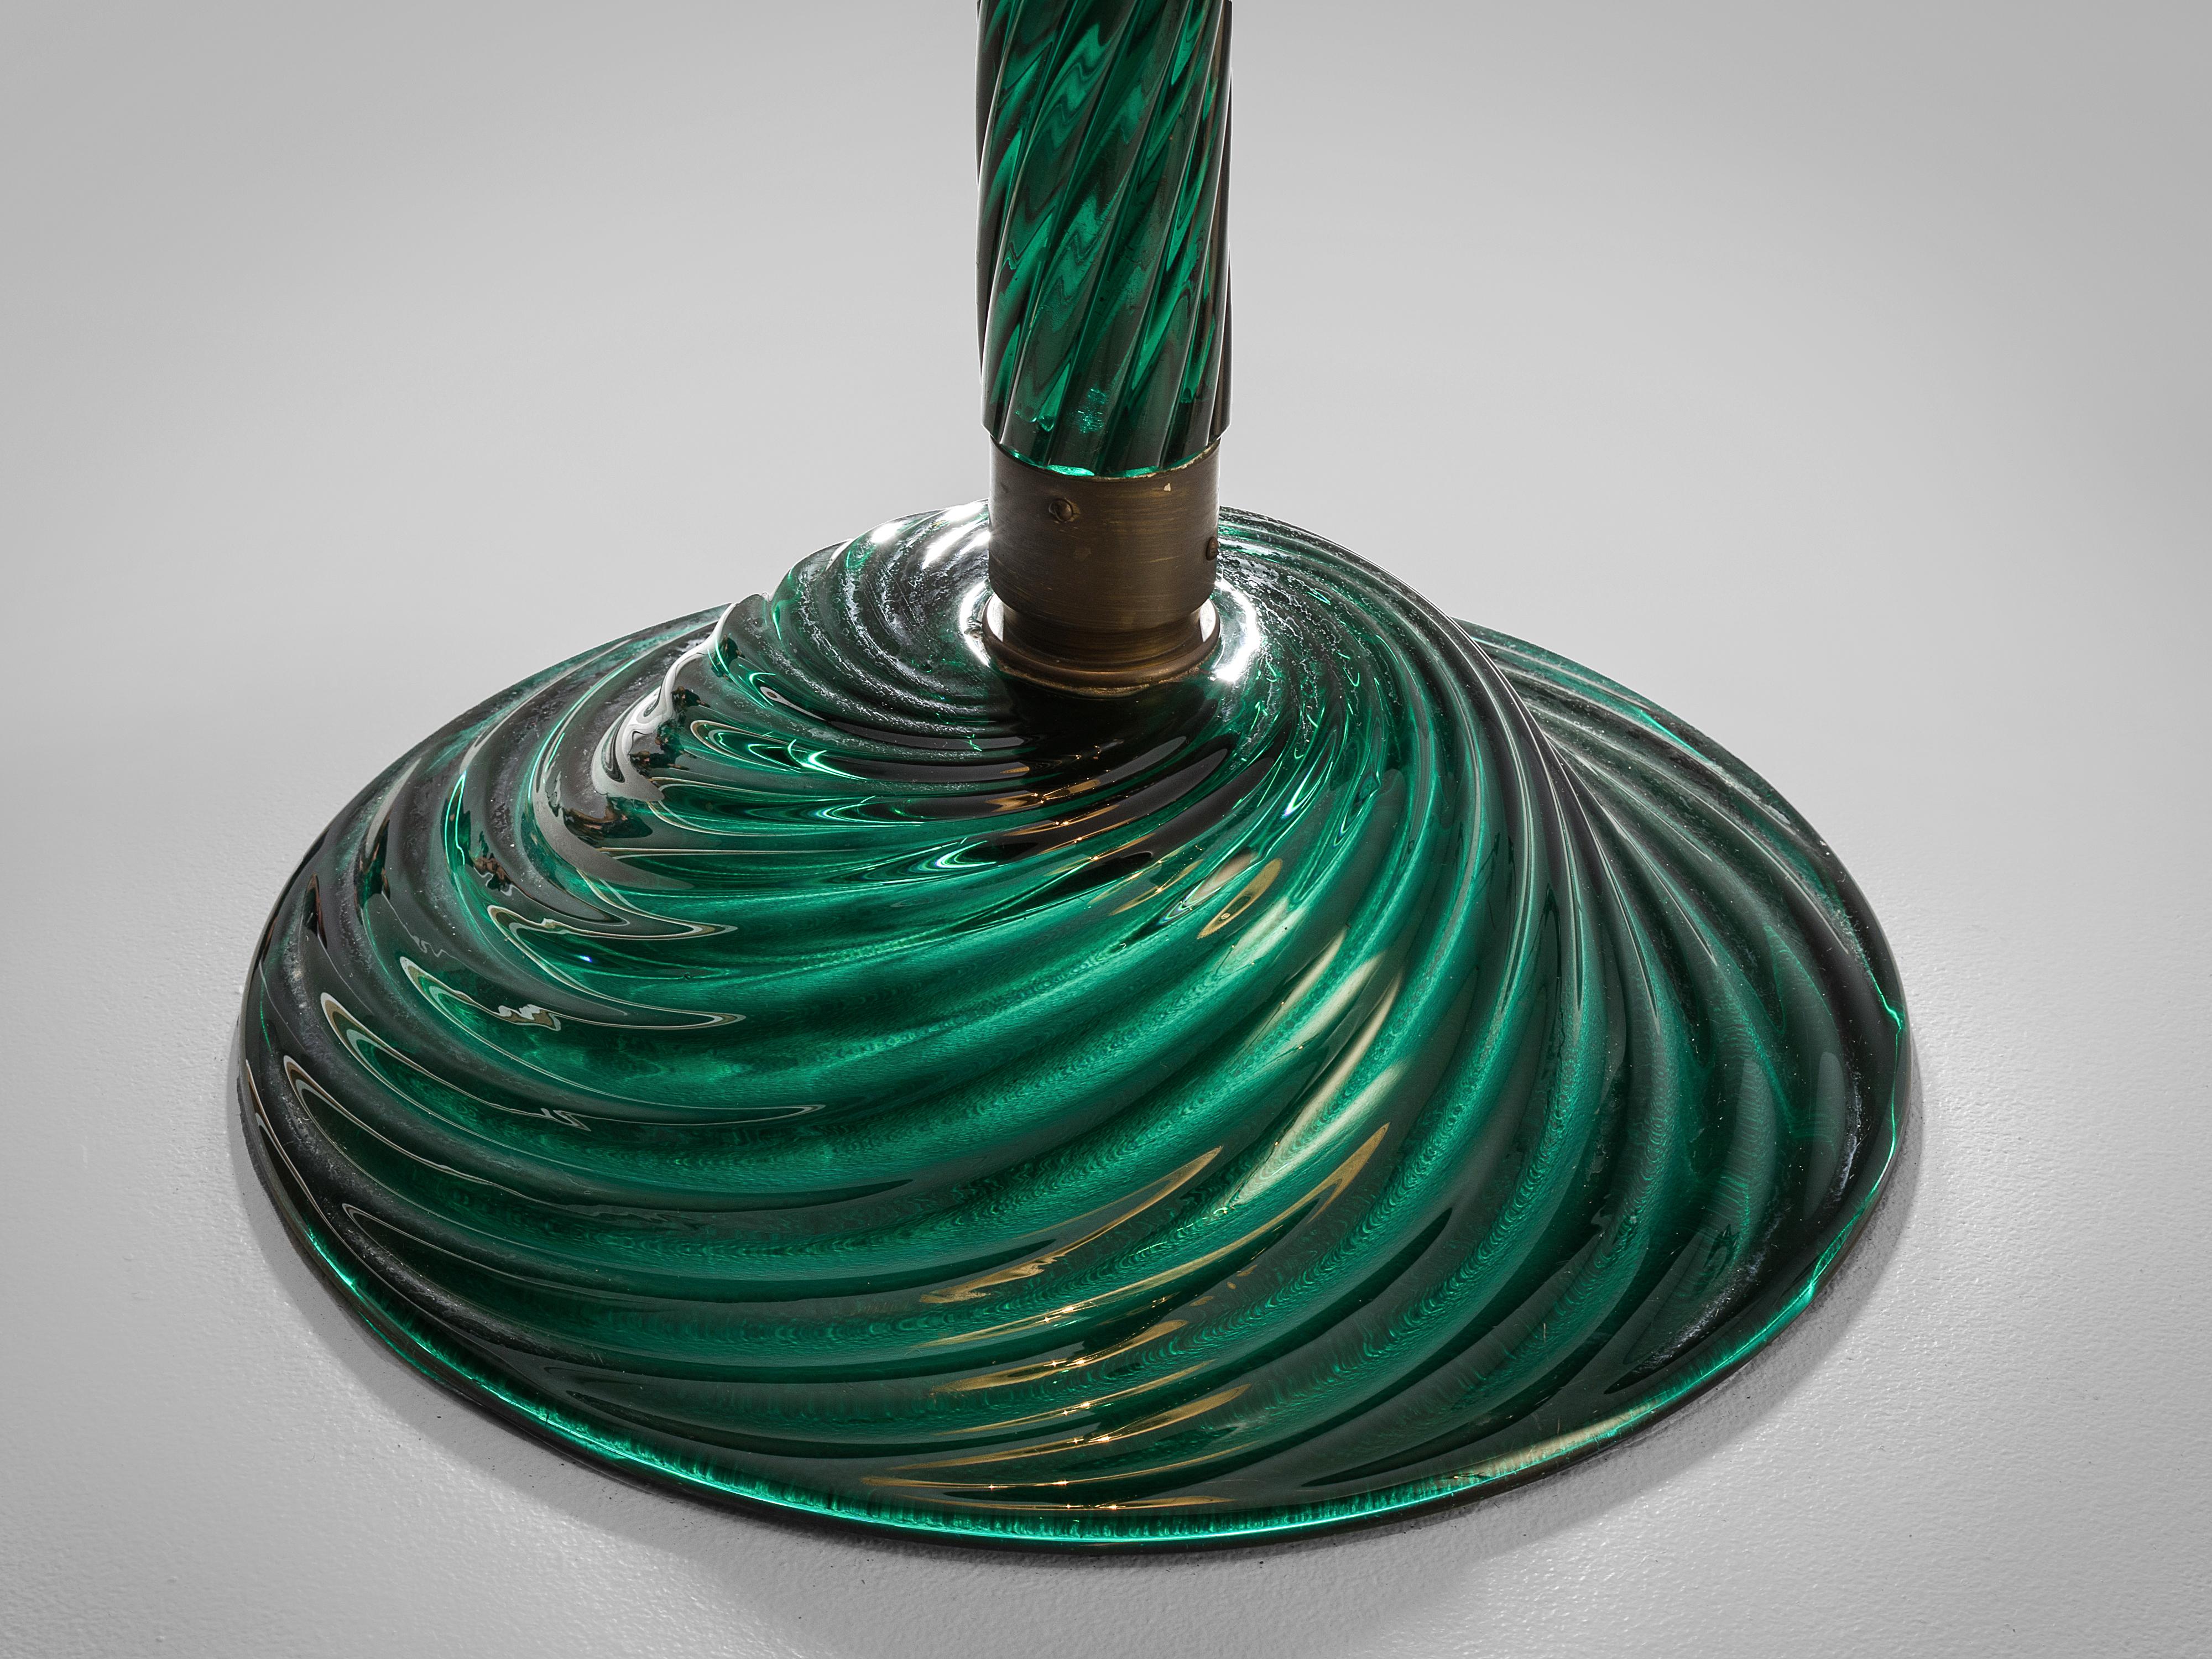 Italian Attributed to Venini Floor Lamp in Green Glass